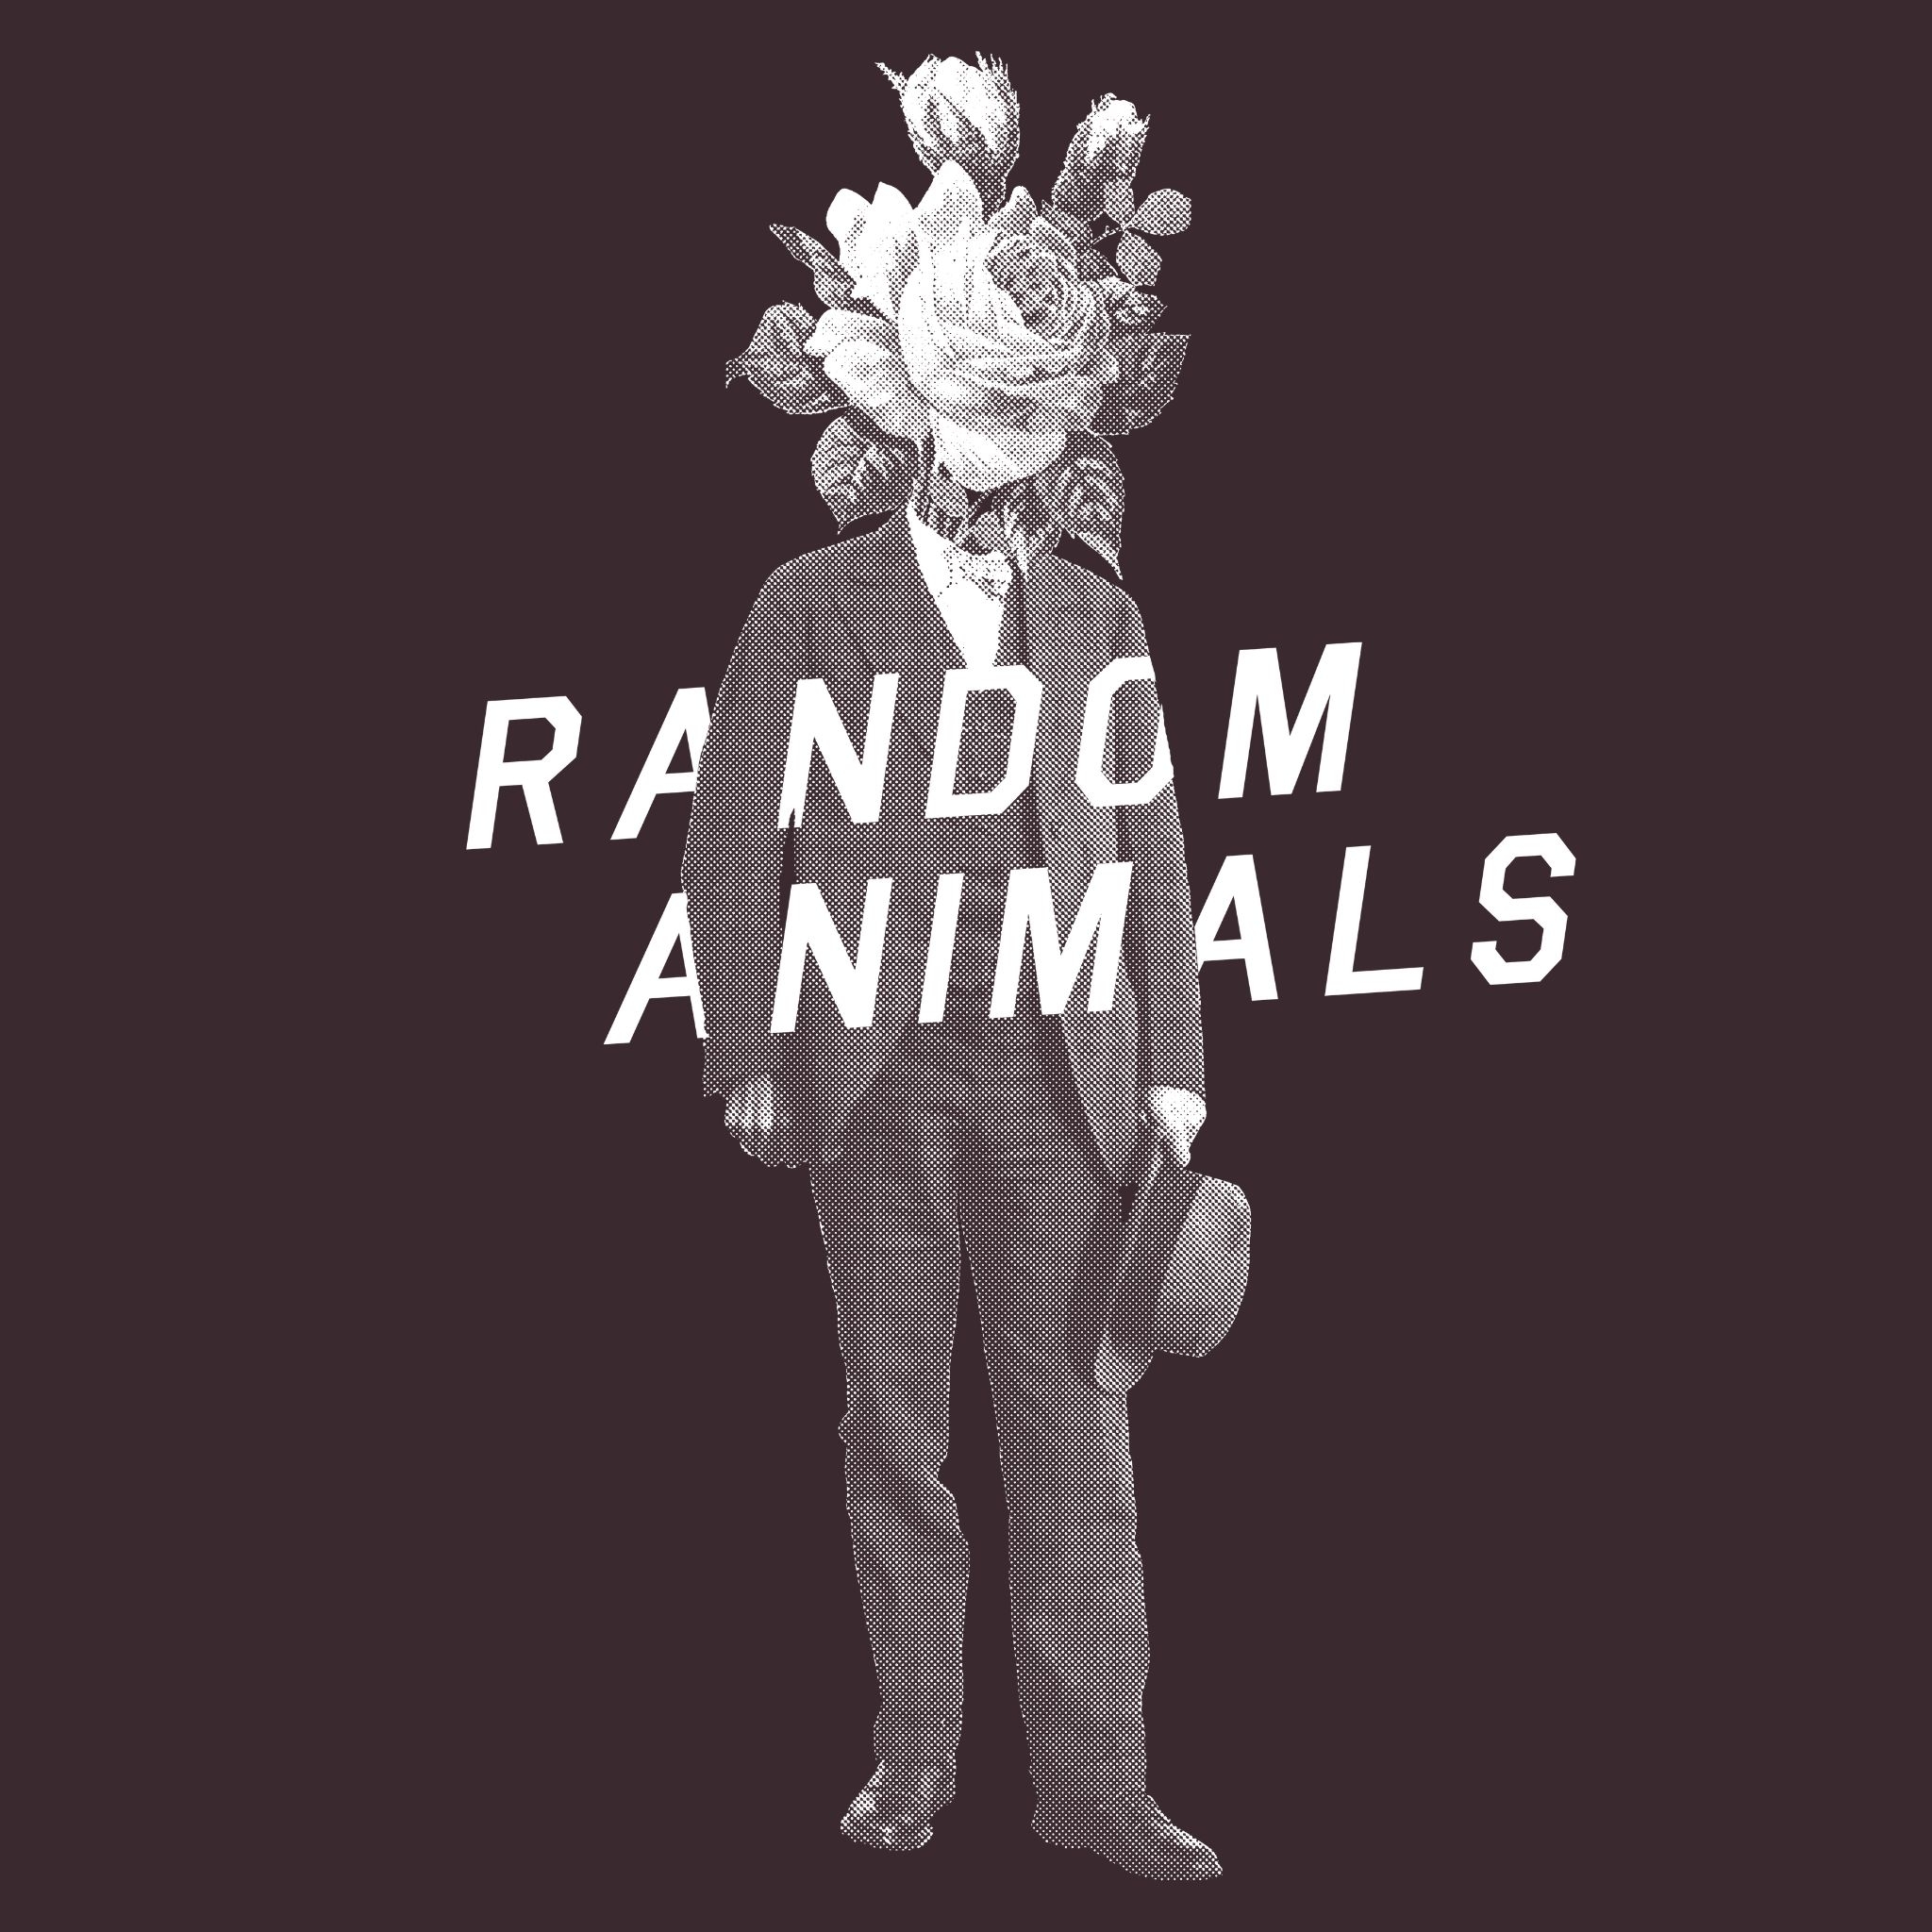 RANDOM ANIMALS